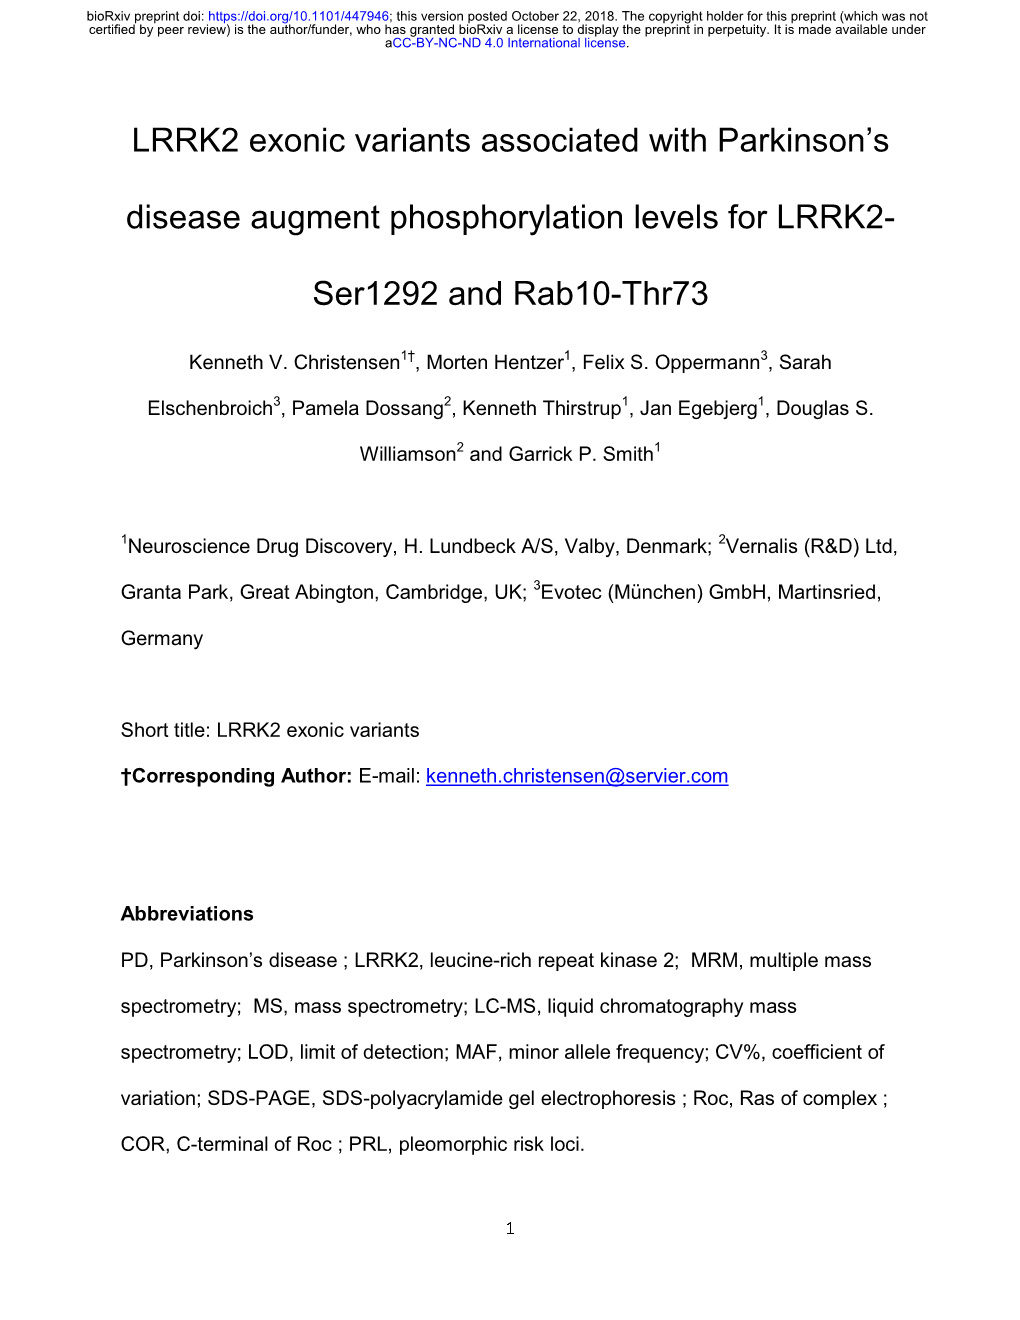 LRRK2 Exonic Variants Associated with Parkinson's Disease